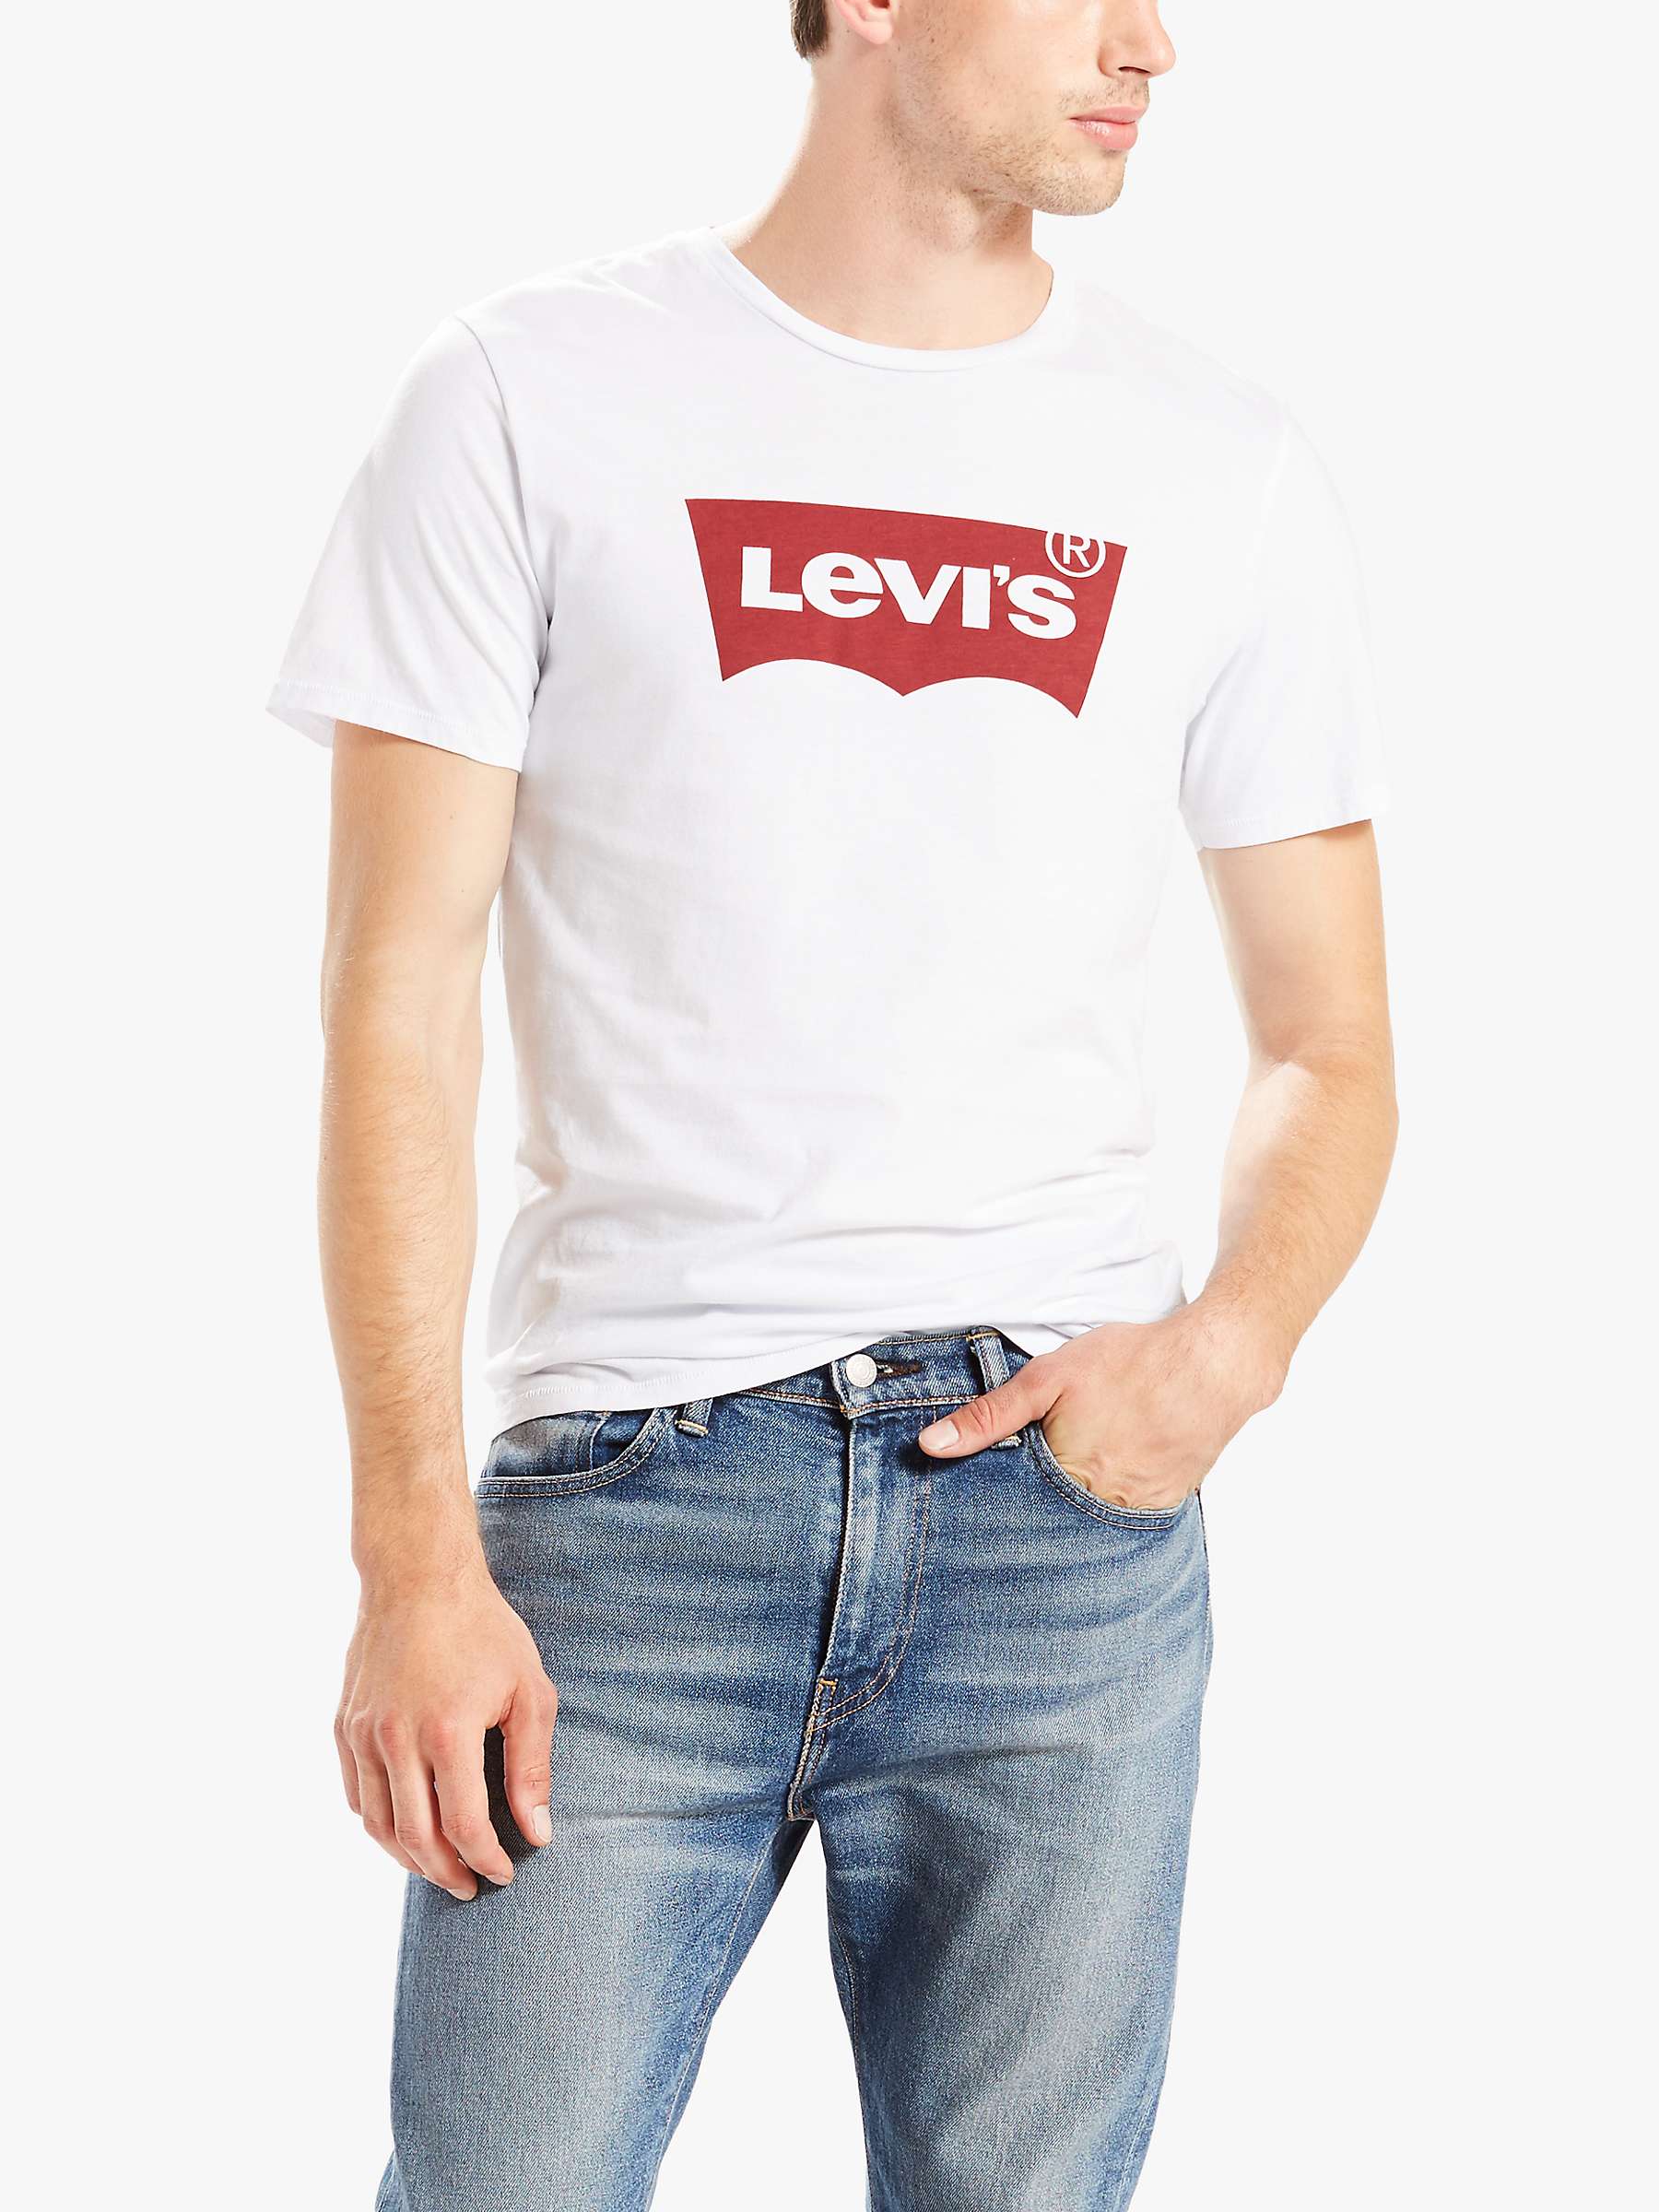 Купить футболку levis. Майка Levis мужские. Levis logo футболка. Майка Левис белая. Футболка левайс мужская белая.